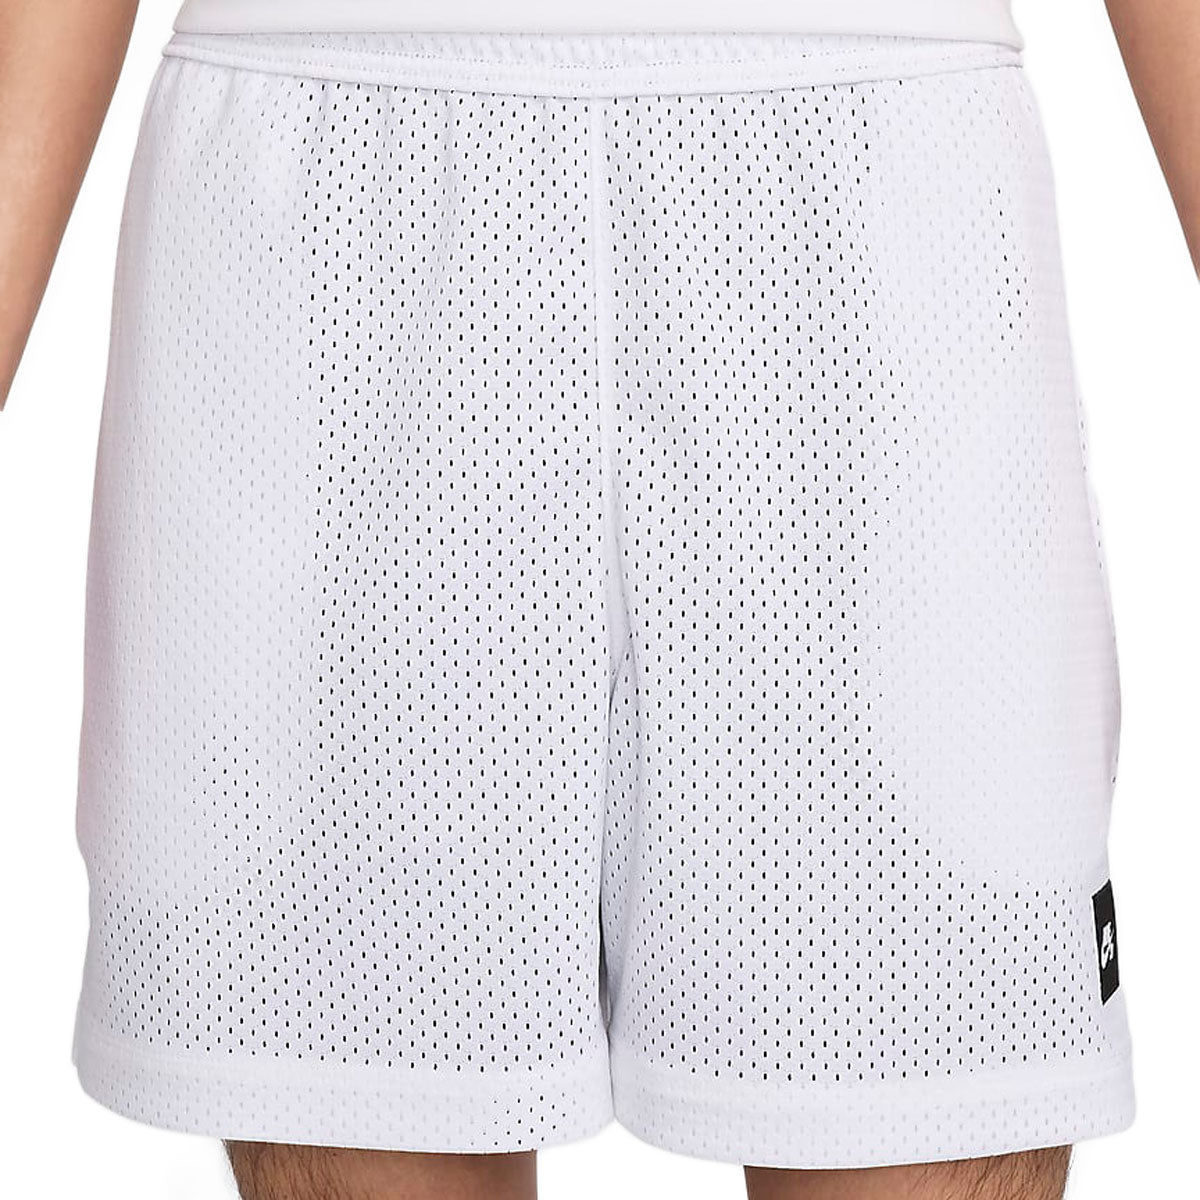 Nike SB Basketball Skate Shorts - Black/White image 4